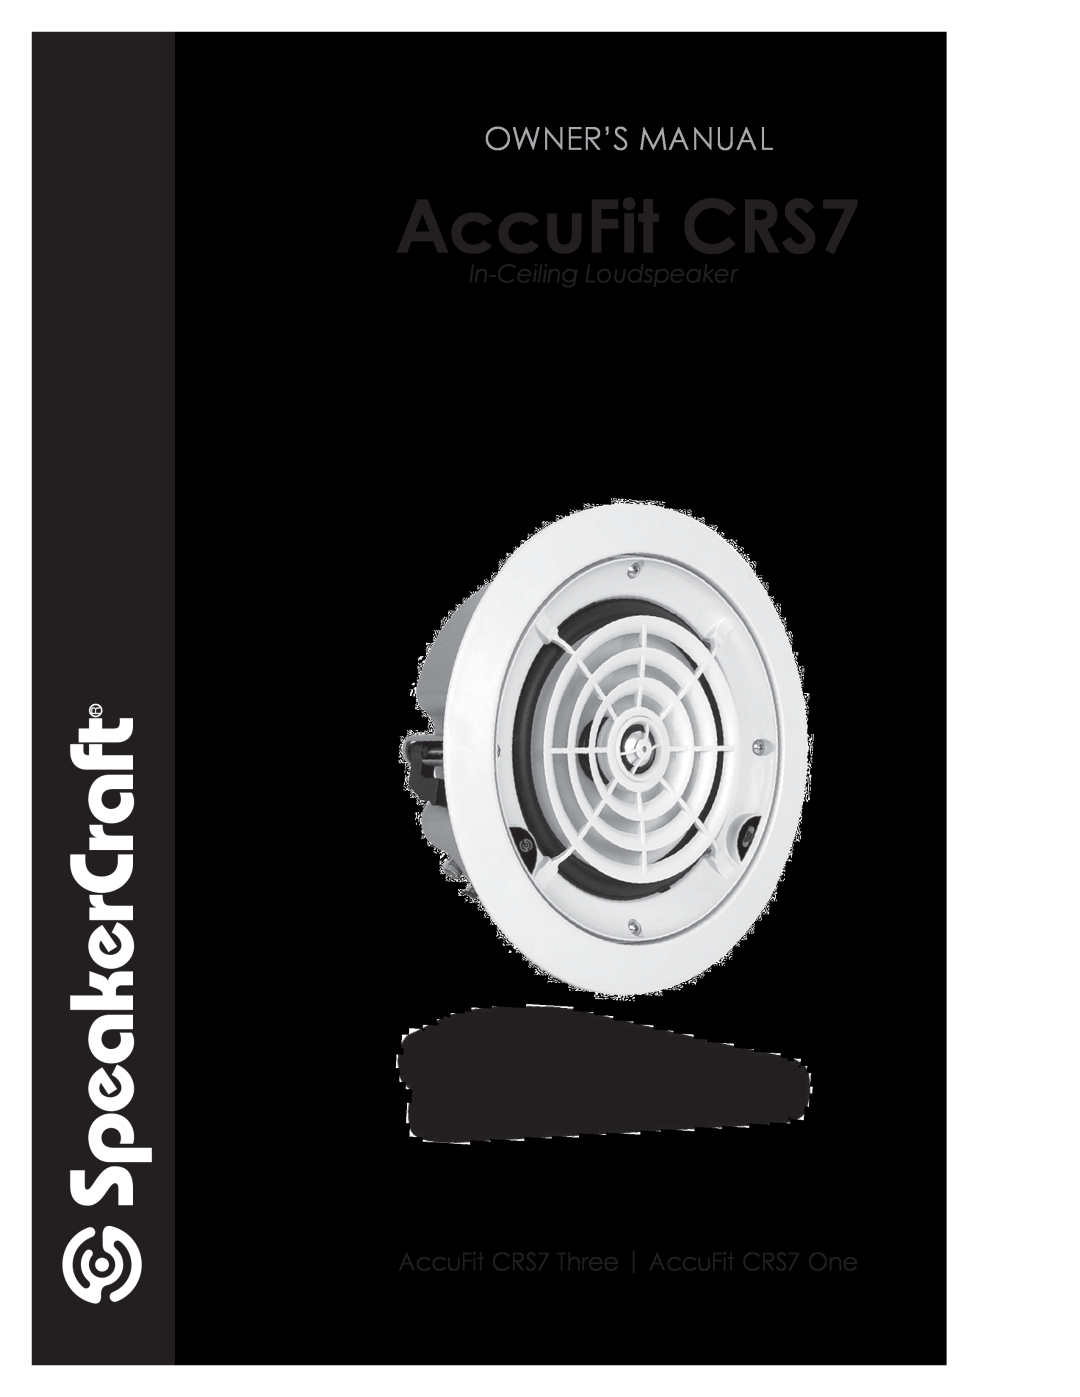 SpeakerCraft owner manual In-CeilingLoudspeaker, AccuFit CRS7 Three AccuFit CRS7 One 